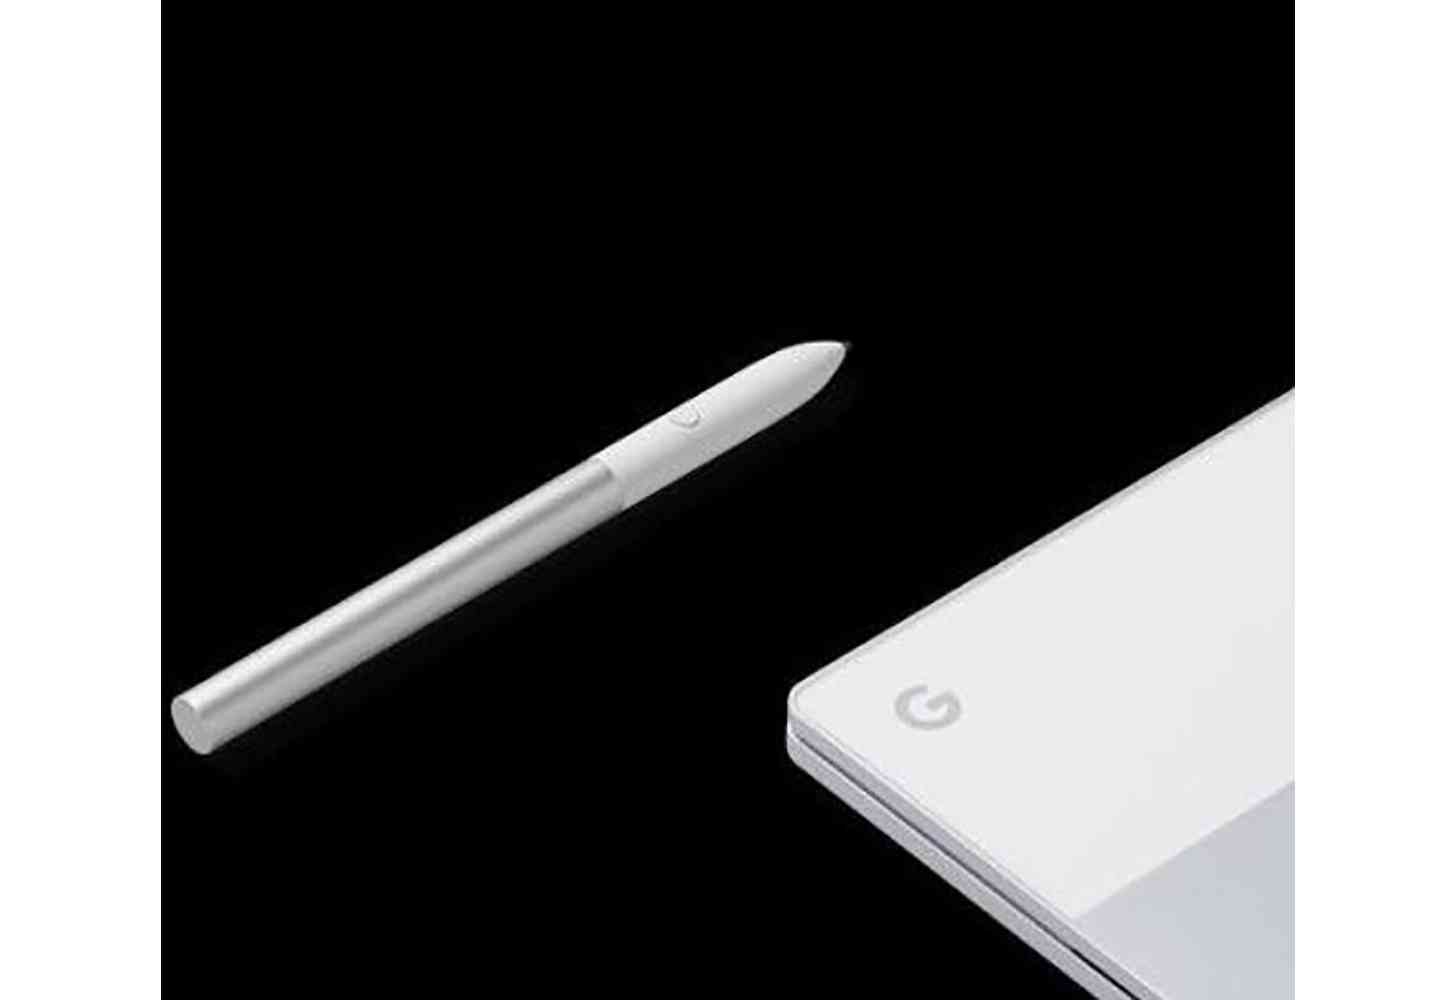 Google Pixelbook Pen stylus image leak